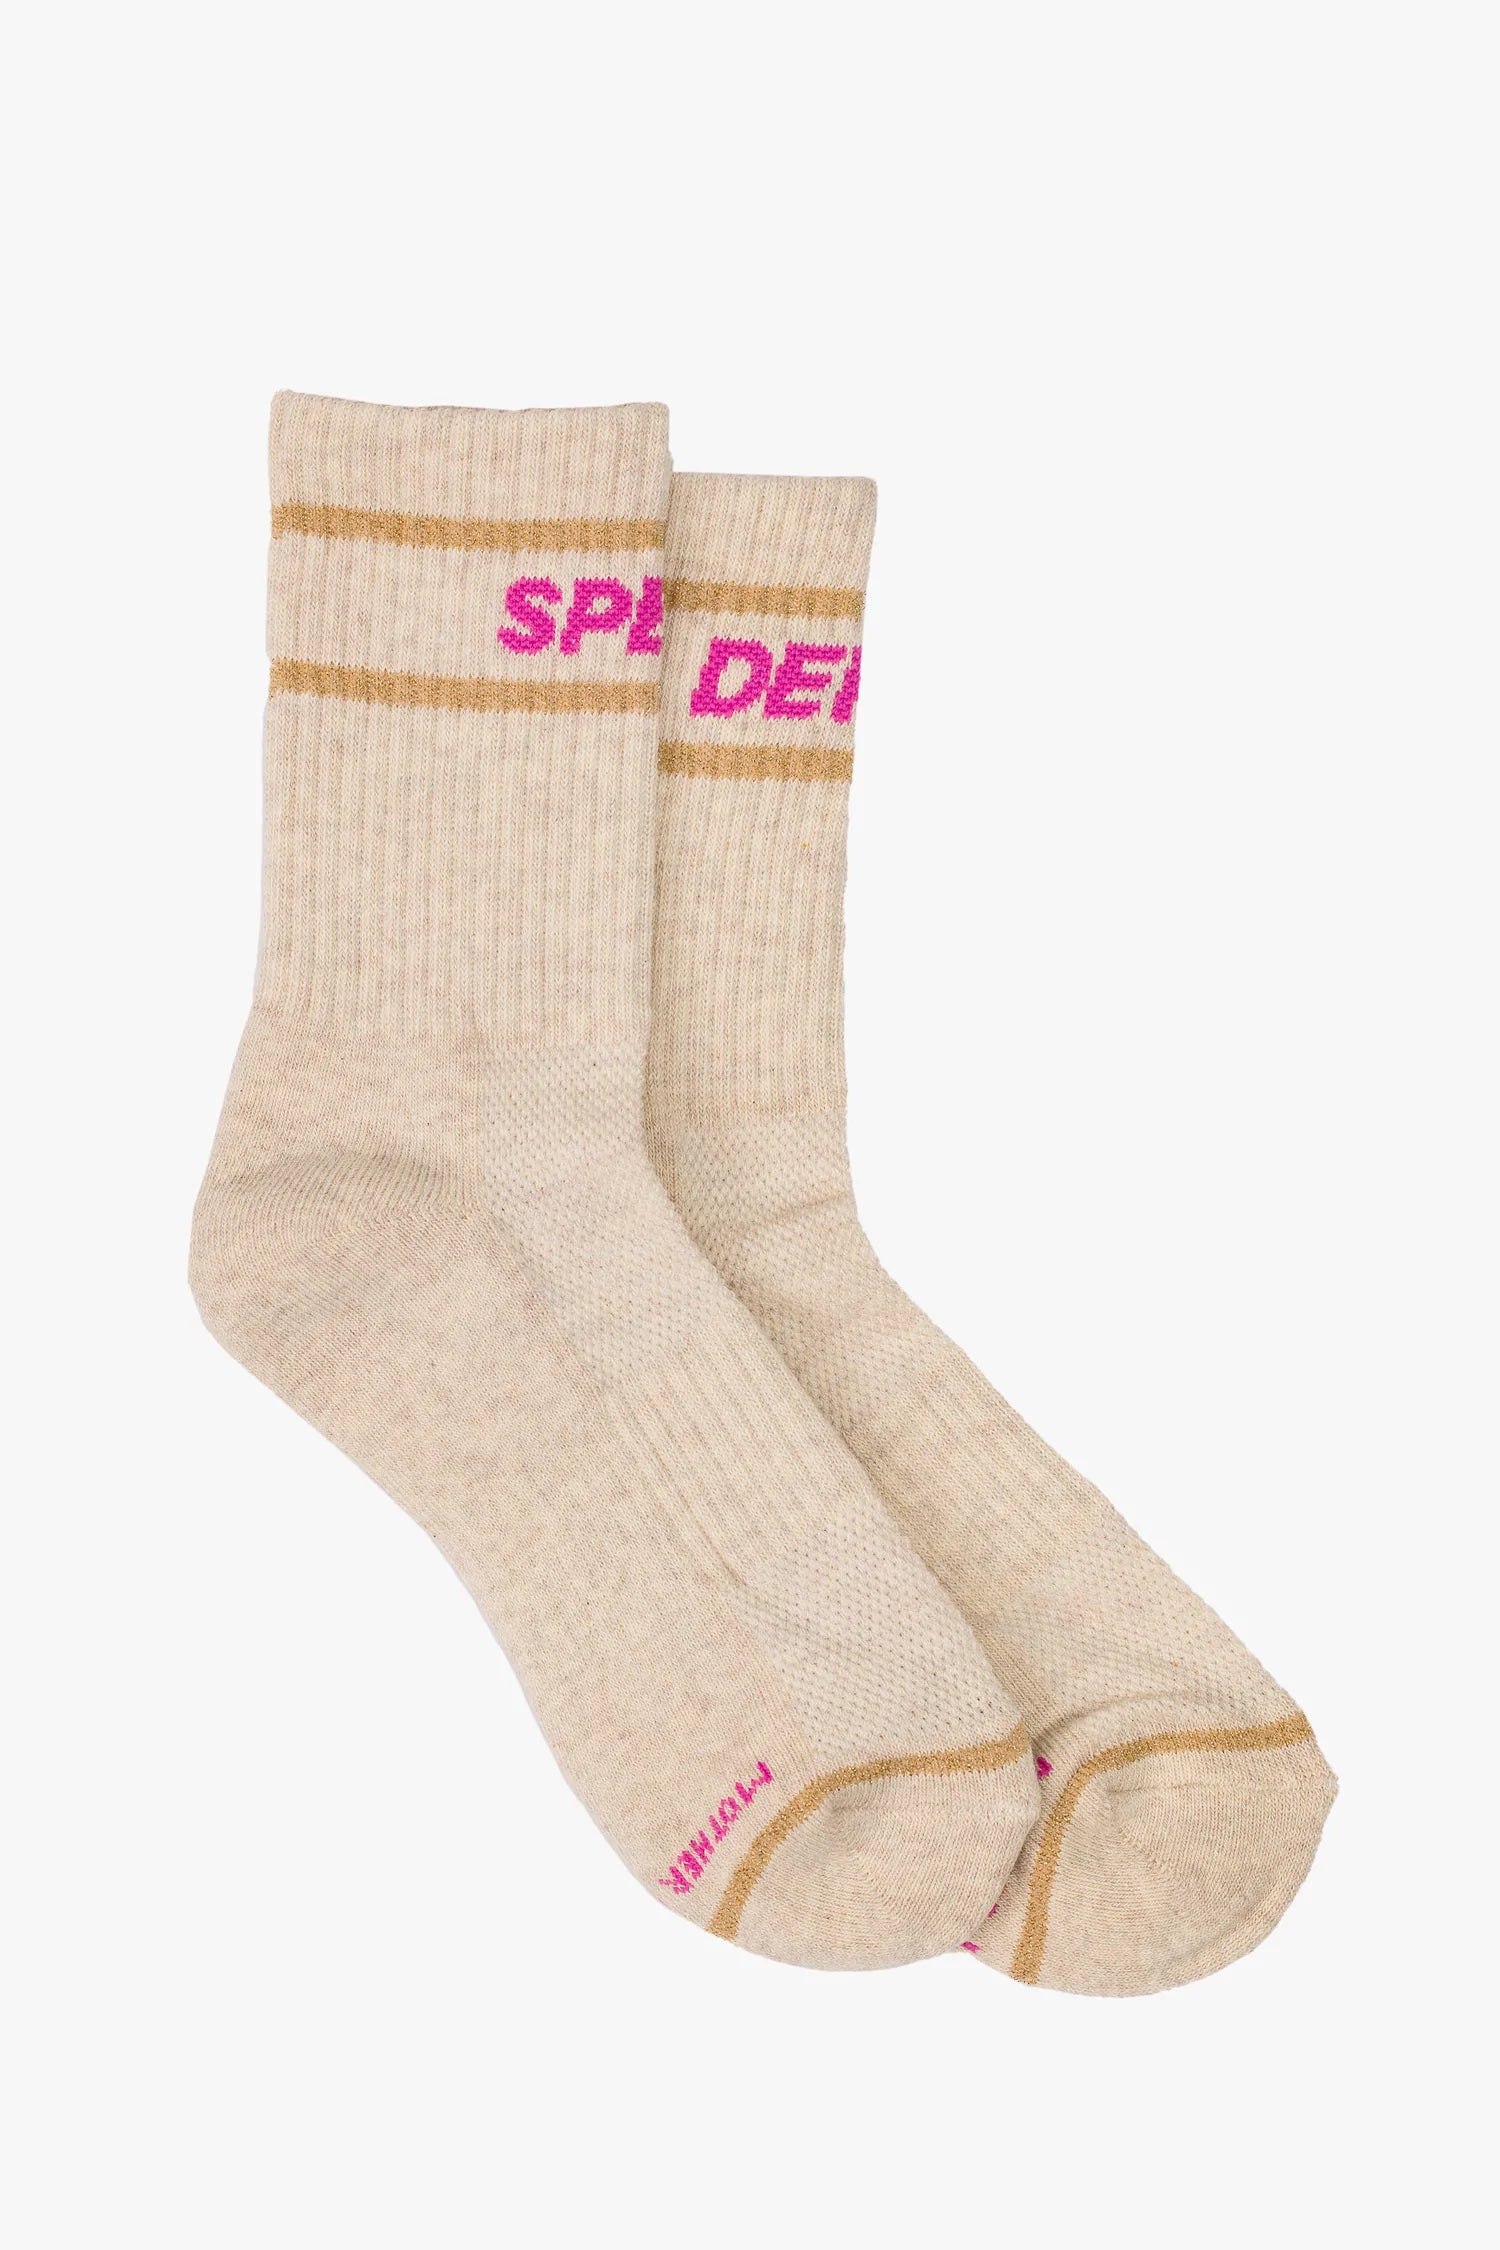 Classic Tube Socks - Speed Demon